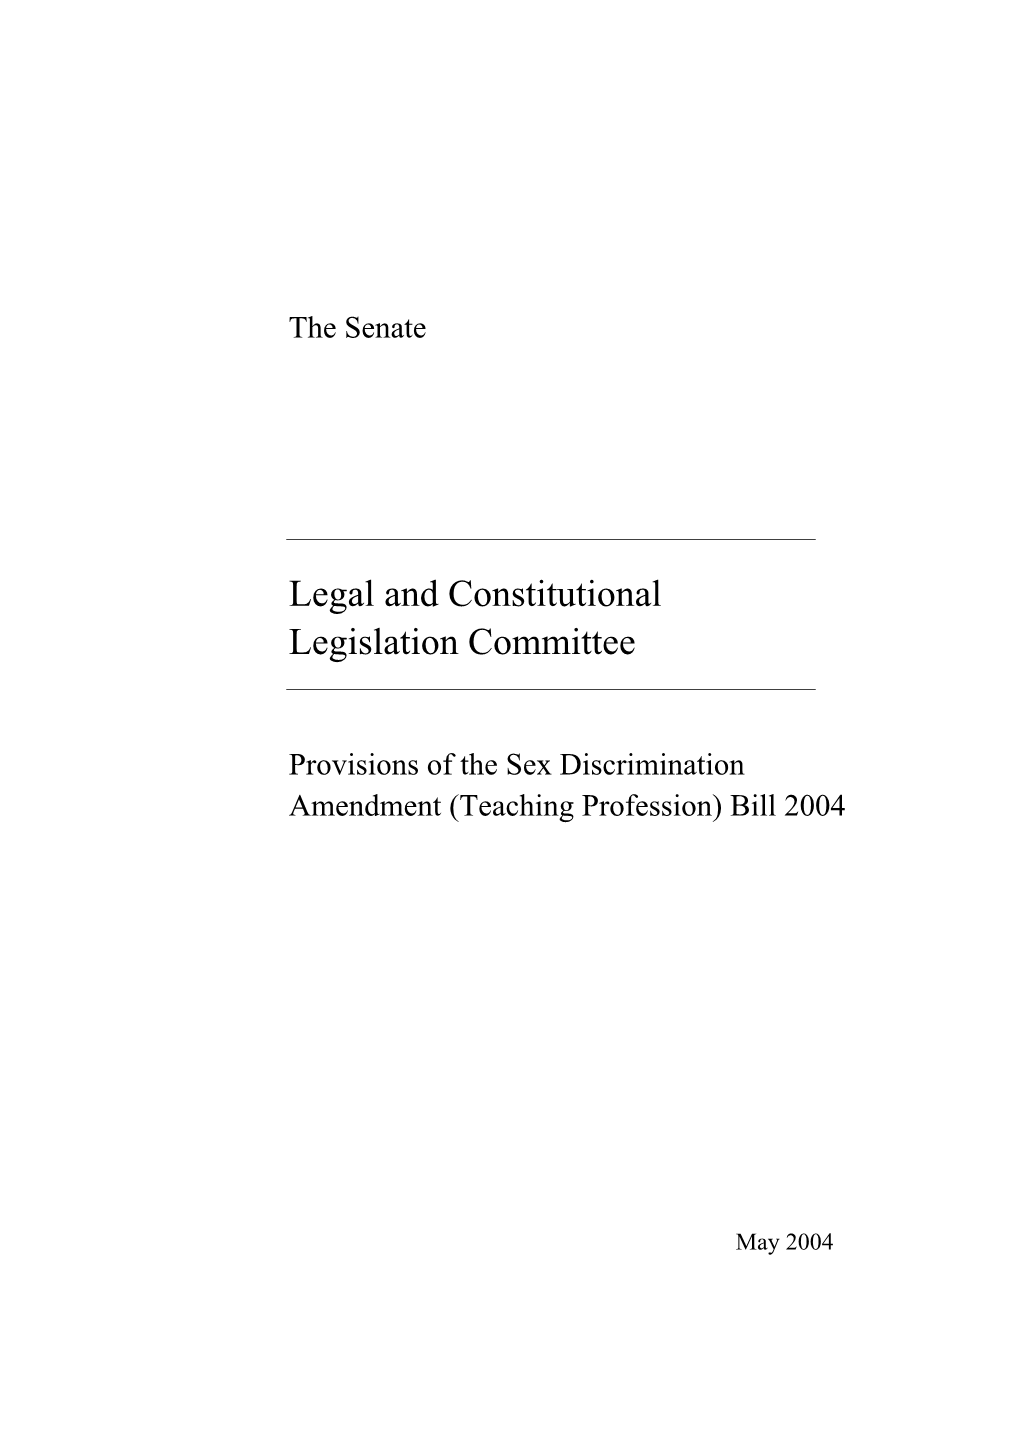 Legal and Constitutional Legislation Committee